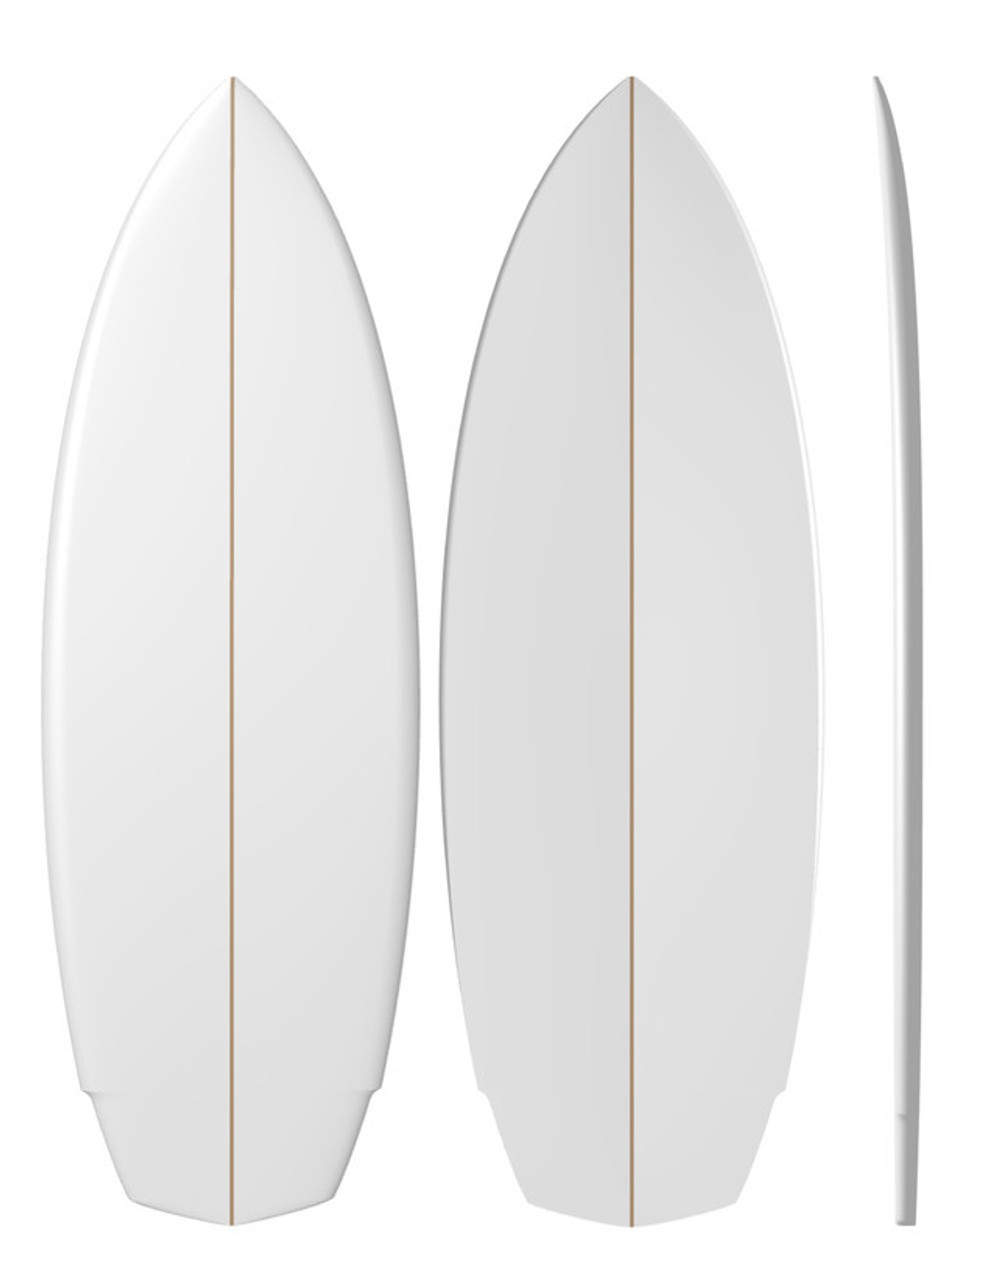 Machine Shape Blank and Material Kit: PU WAKE SURF BOARD - Shapers Surf Co